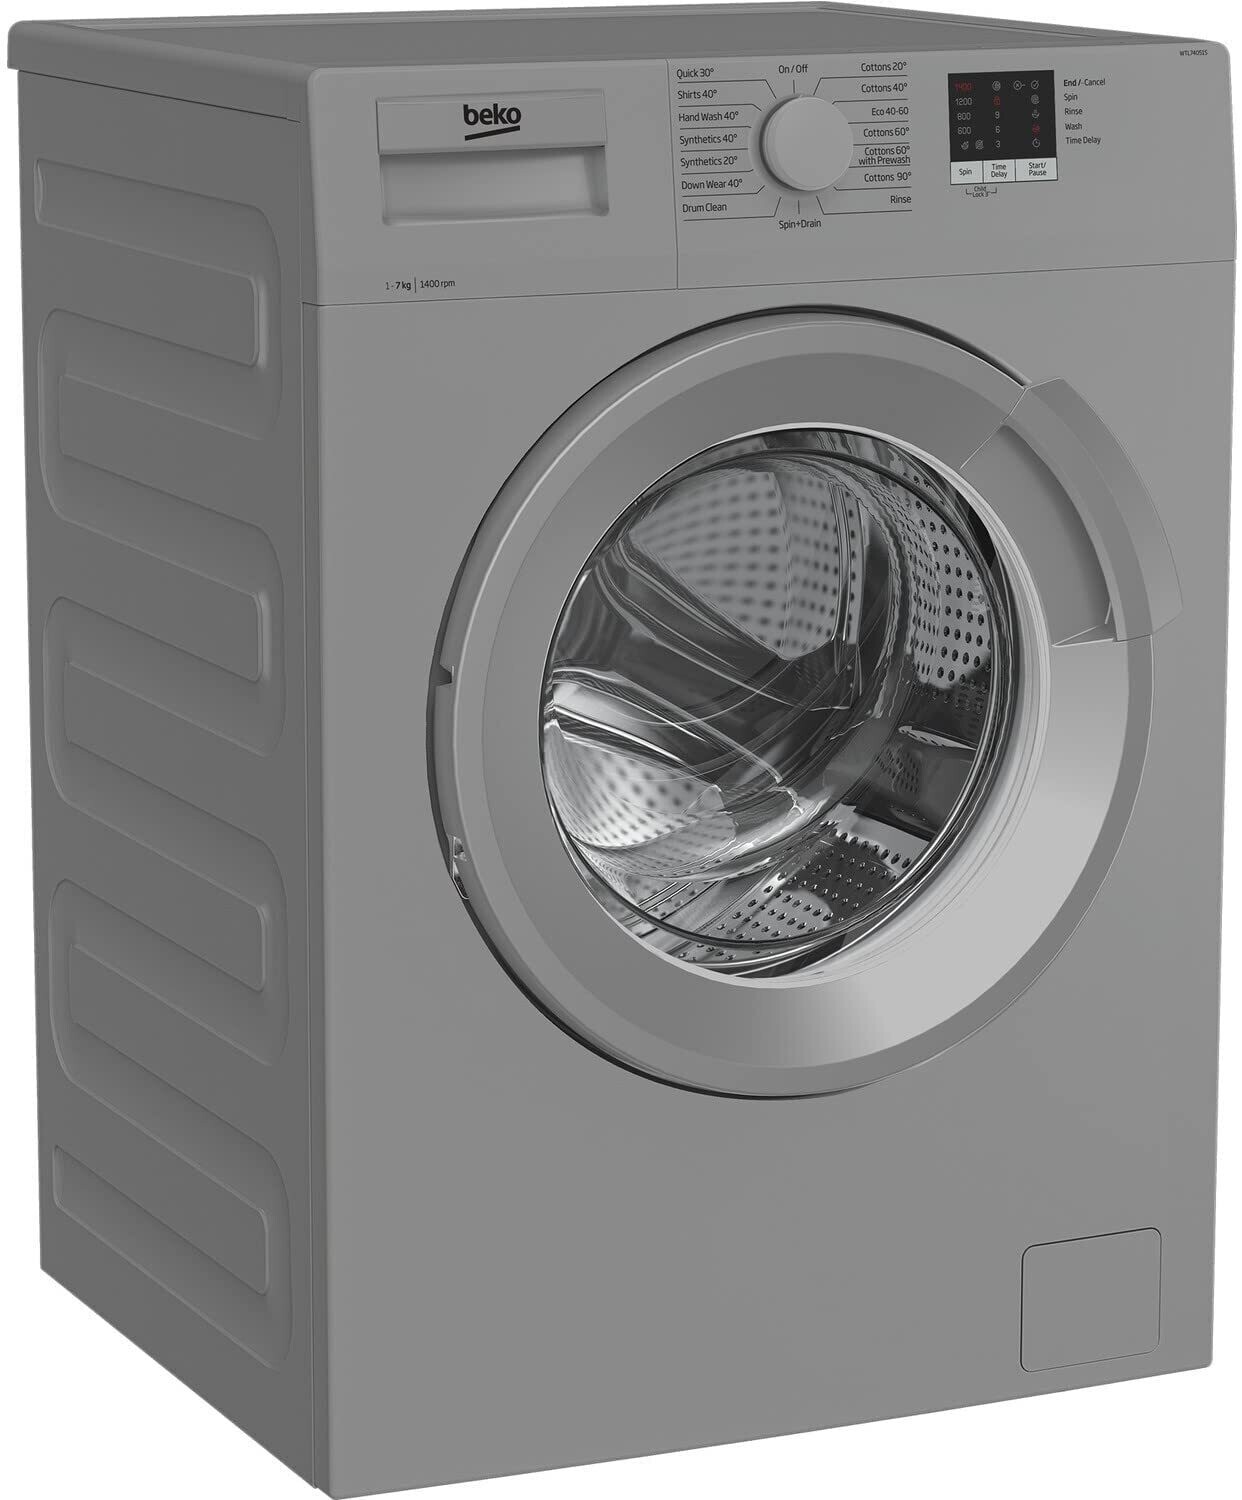 Beko WTL74051S 7Kg Washing Machine with 1400 rpm - Silver Grey -  Brand New